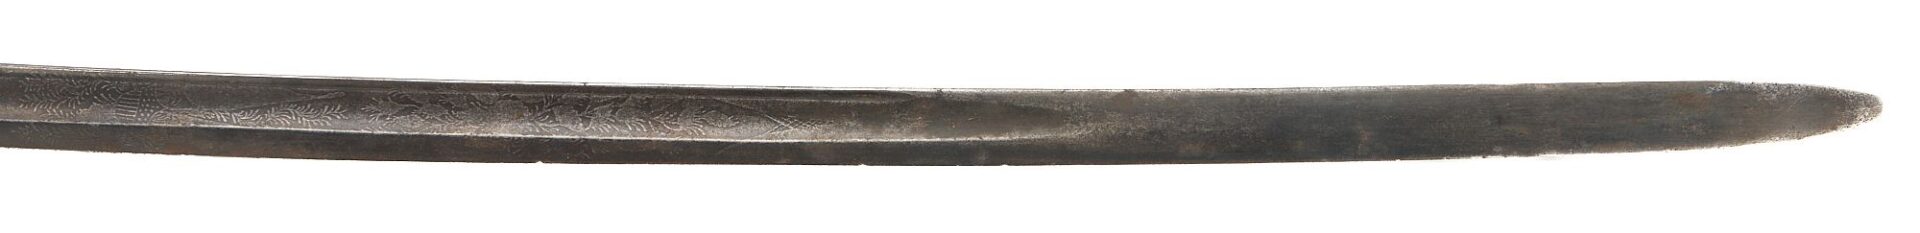 Lot 550: Two M1850 Infantry Field Officer Swords